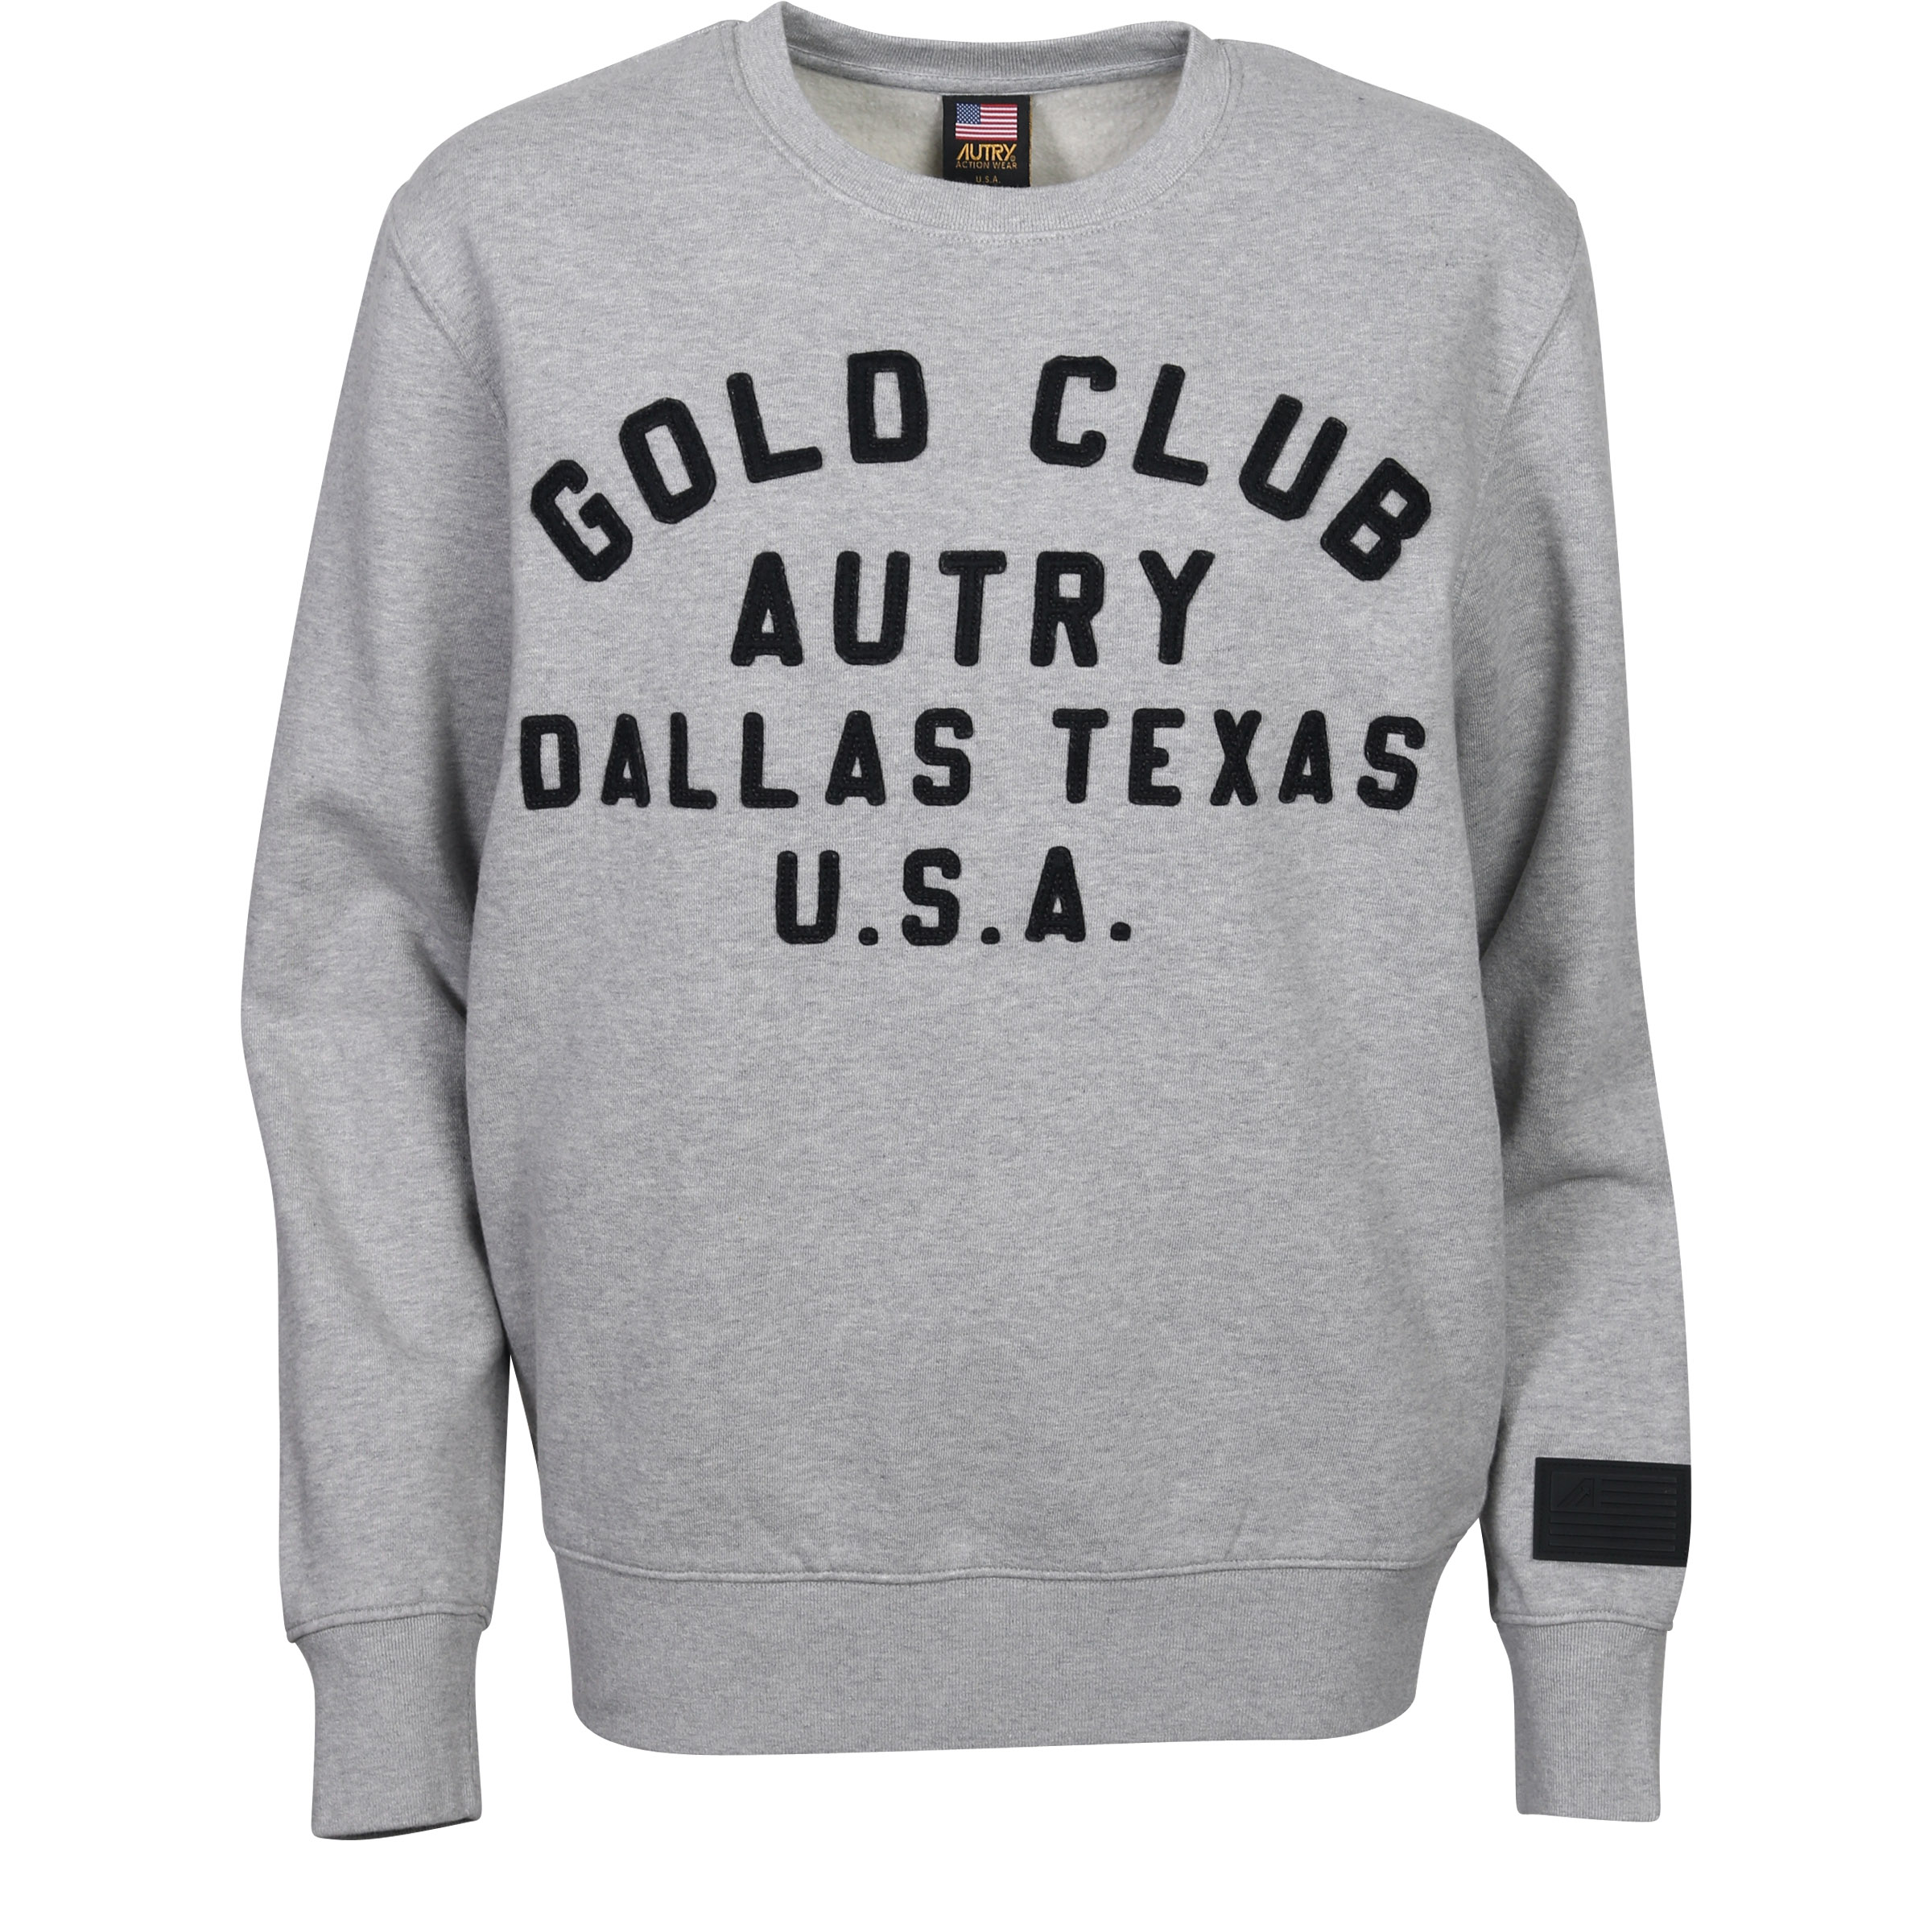 Autry Action Shoes Sweatshirt Goldclub Dallas Grey